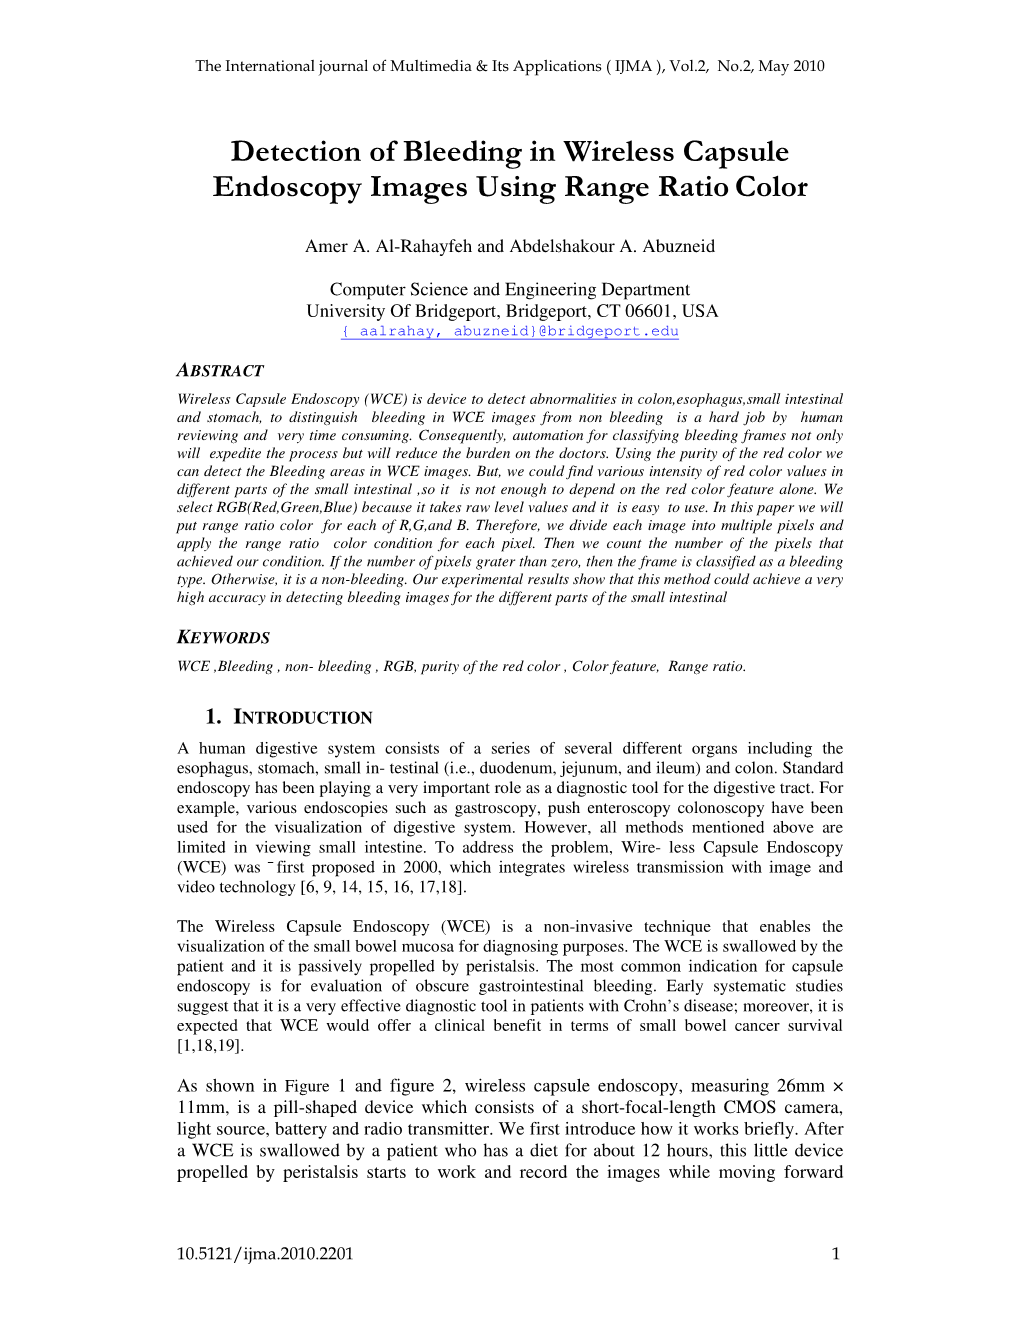 Detection of Bleeding in W Ireless Capsule Endoscopy Images Using Range Ratio Color